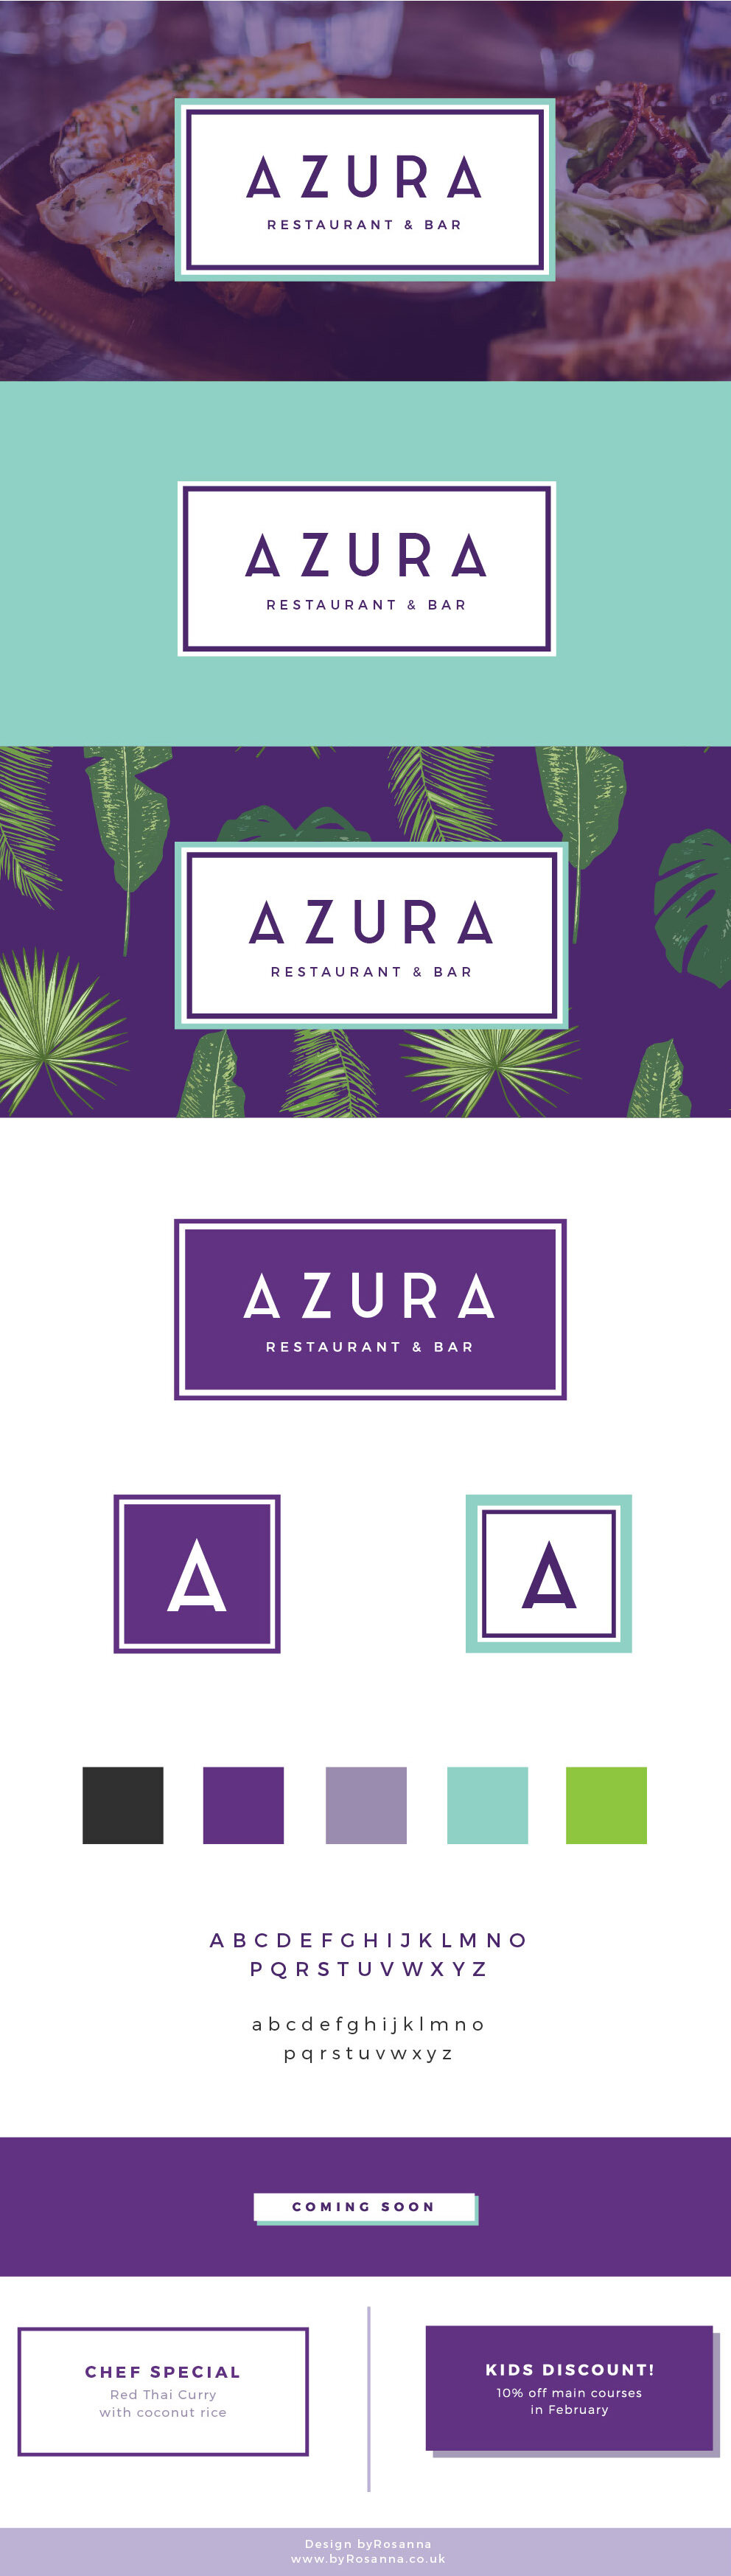 NEW LAUNCH: 'Azura Restaurant & Bar' Branding | byRosanna